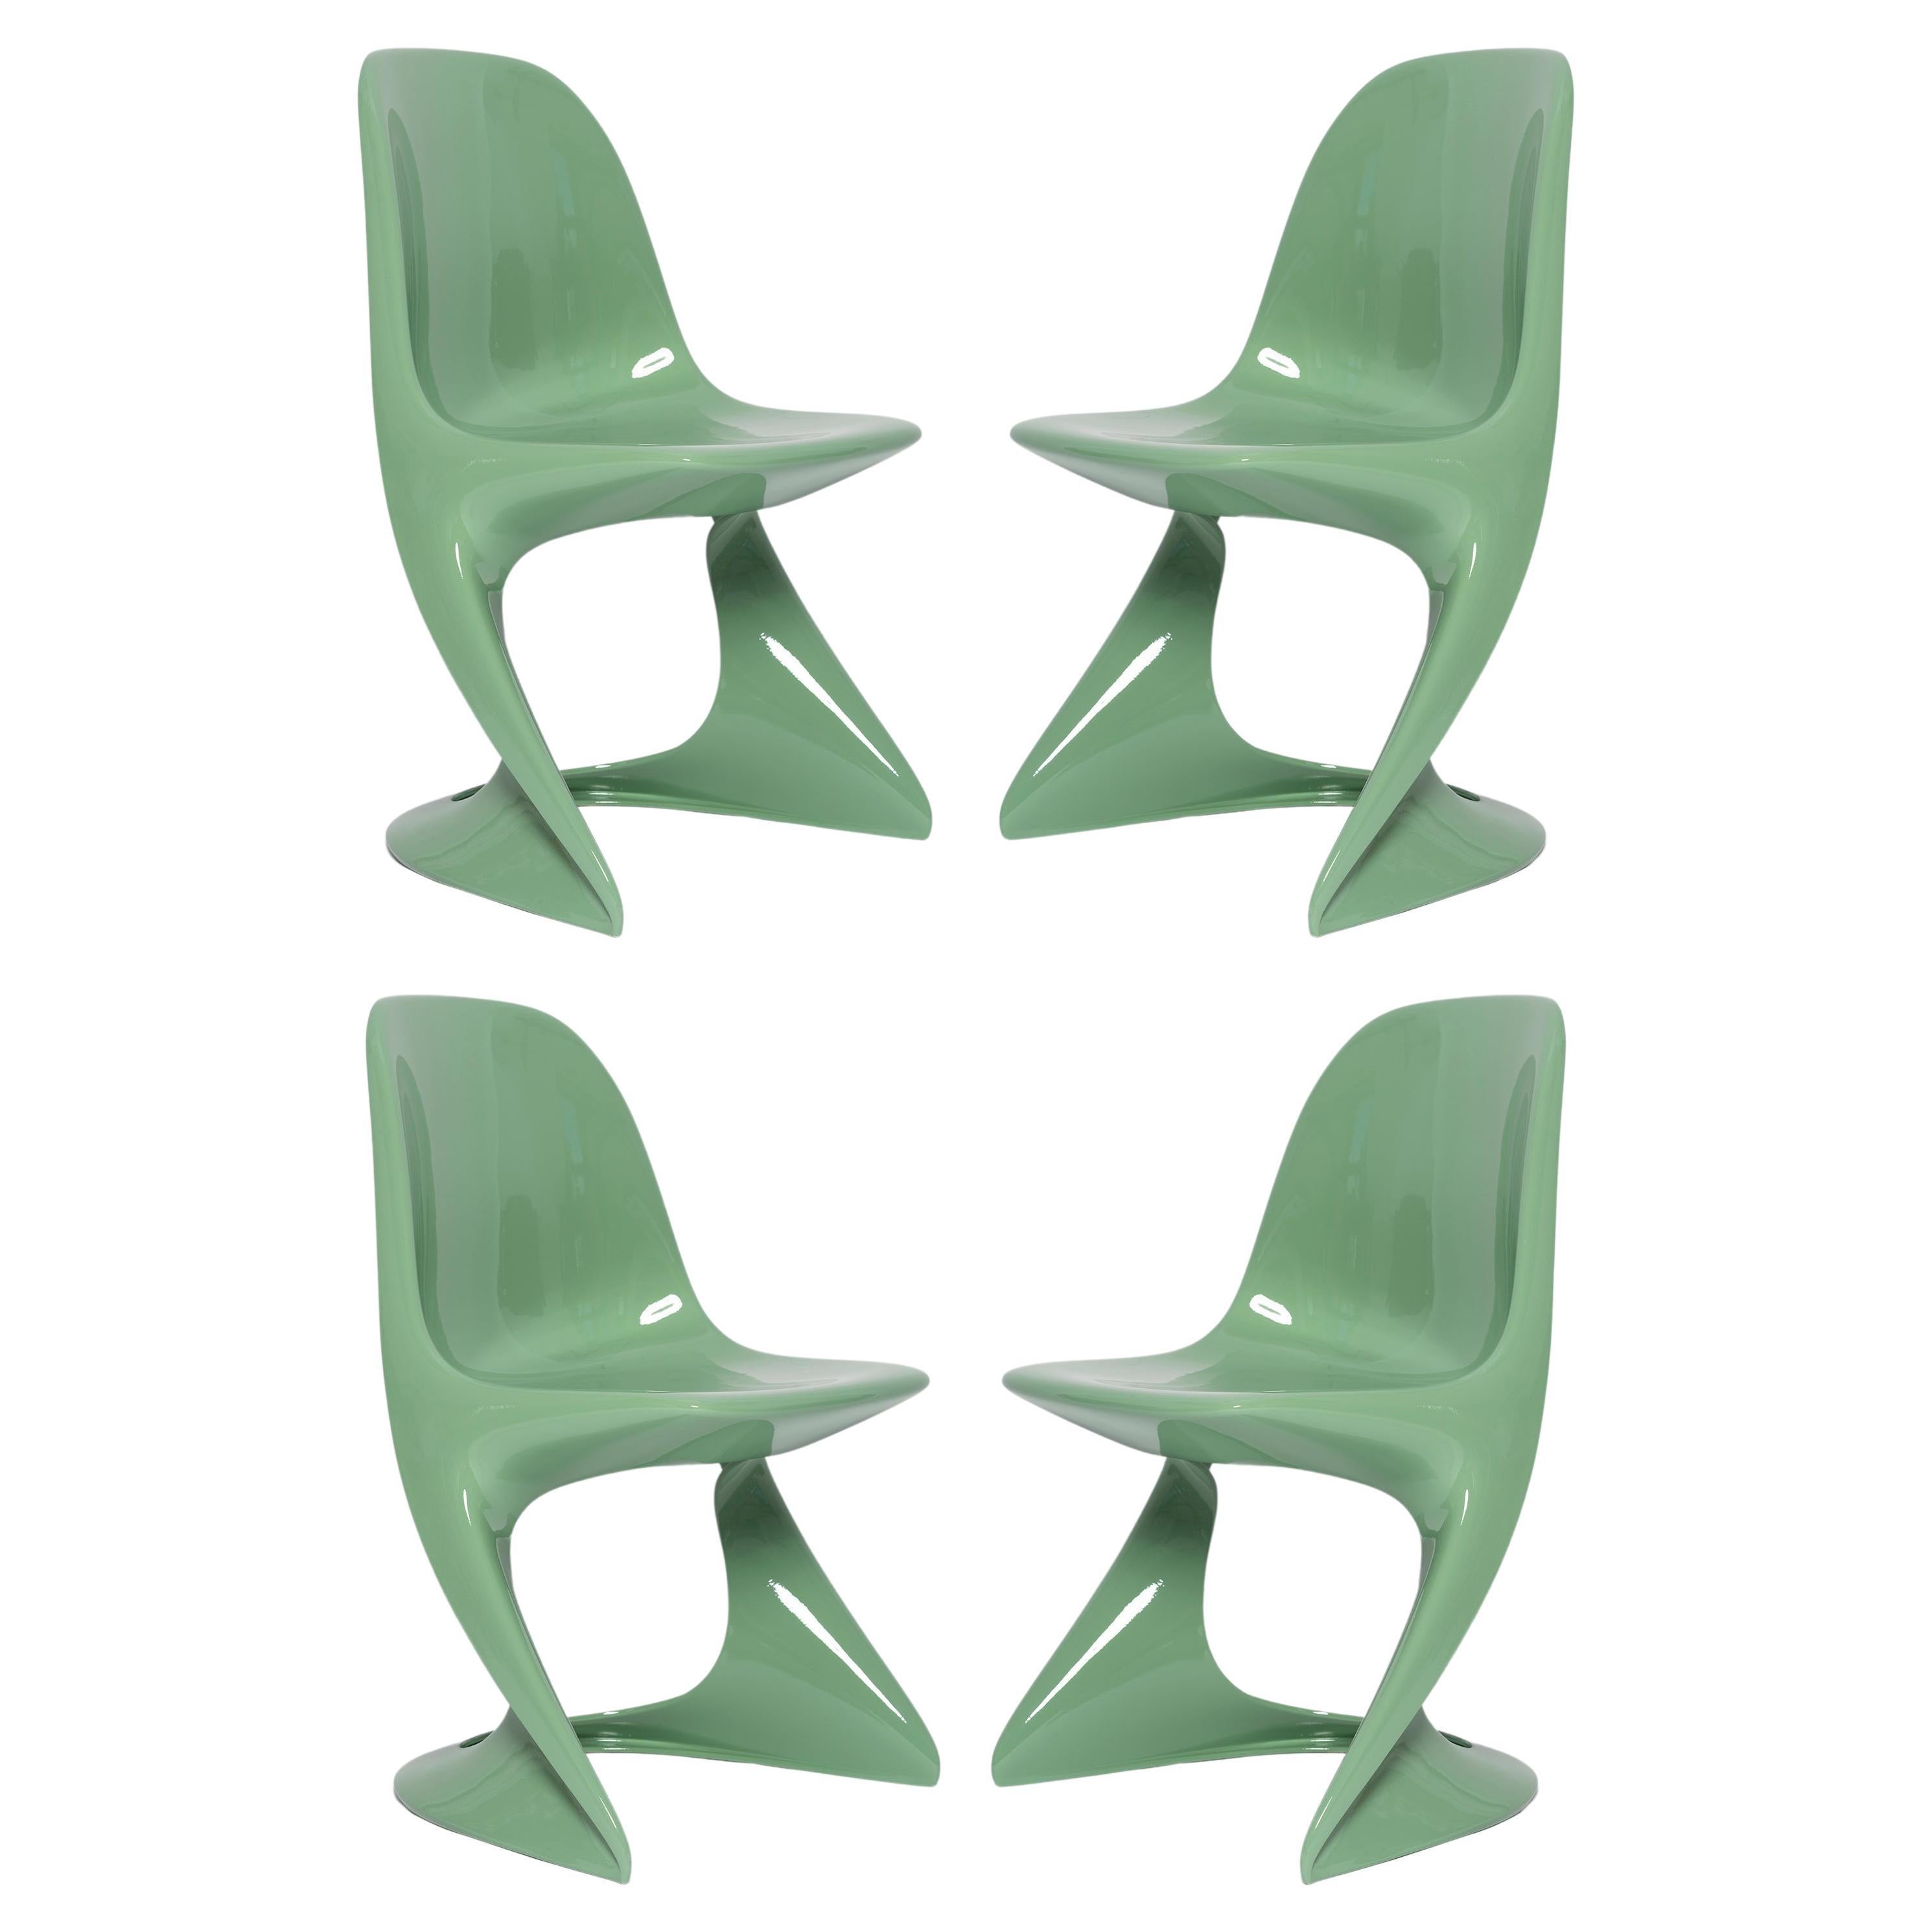 Four Mid-Century Casalino Chairs in Jade Green, Alexander Begge, Casala, 1970s